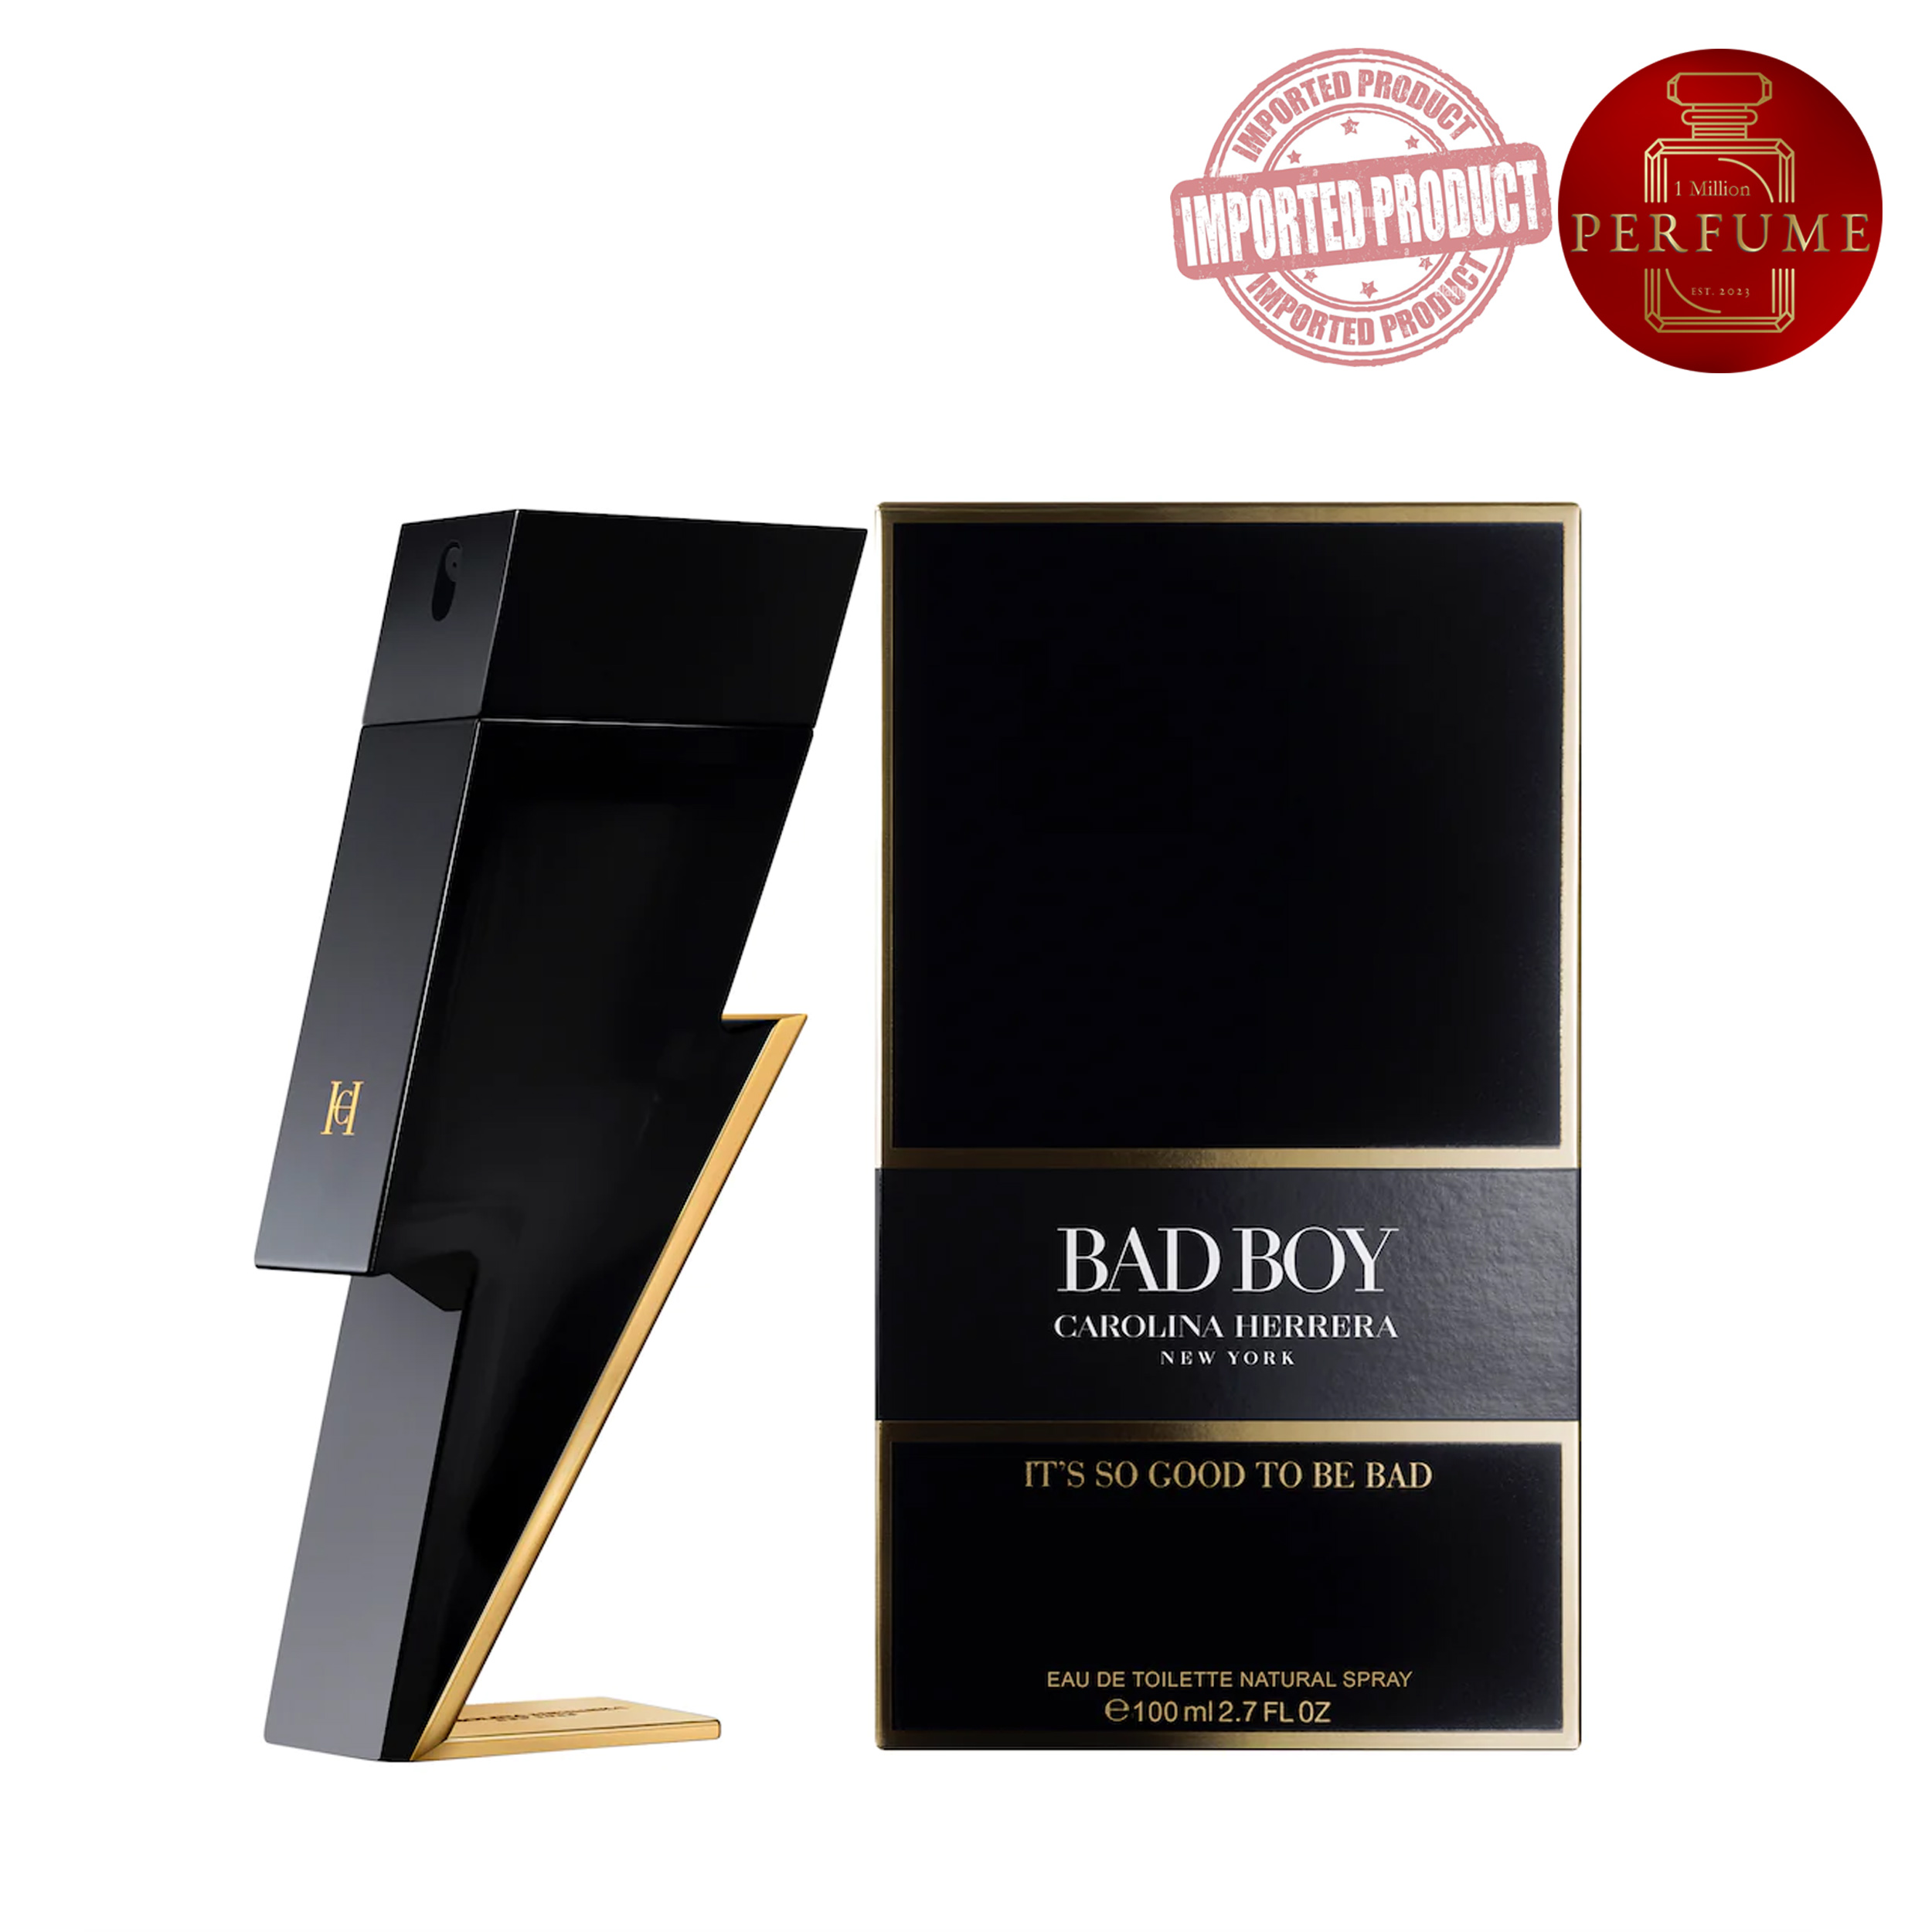 Bad Boy Gold Fantasy Carolina Herrera Perfume Replica Con Fragancia Importada Hombre Luegopago 6040